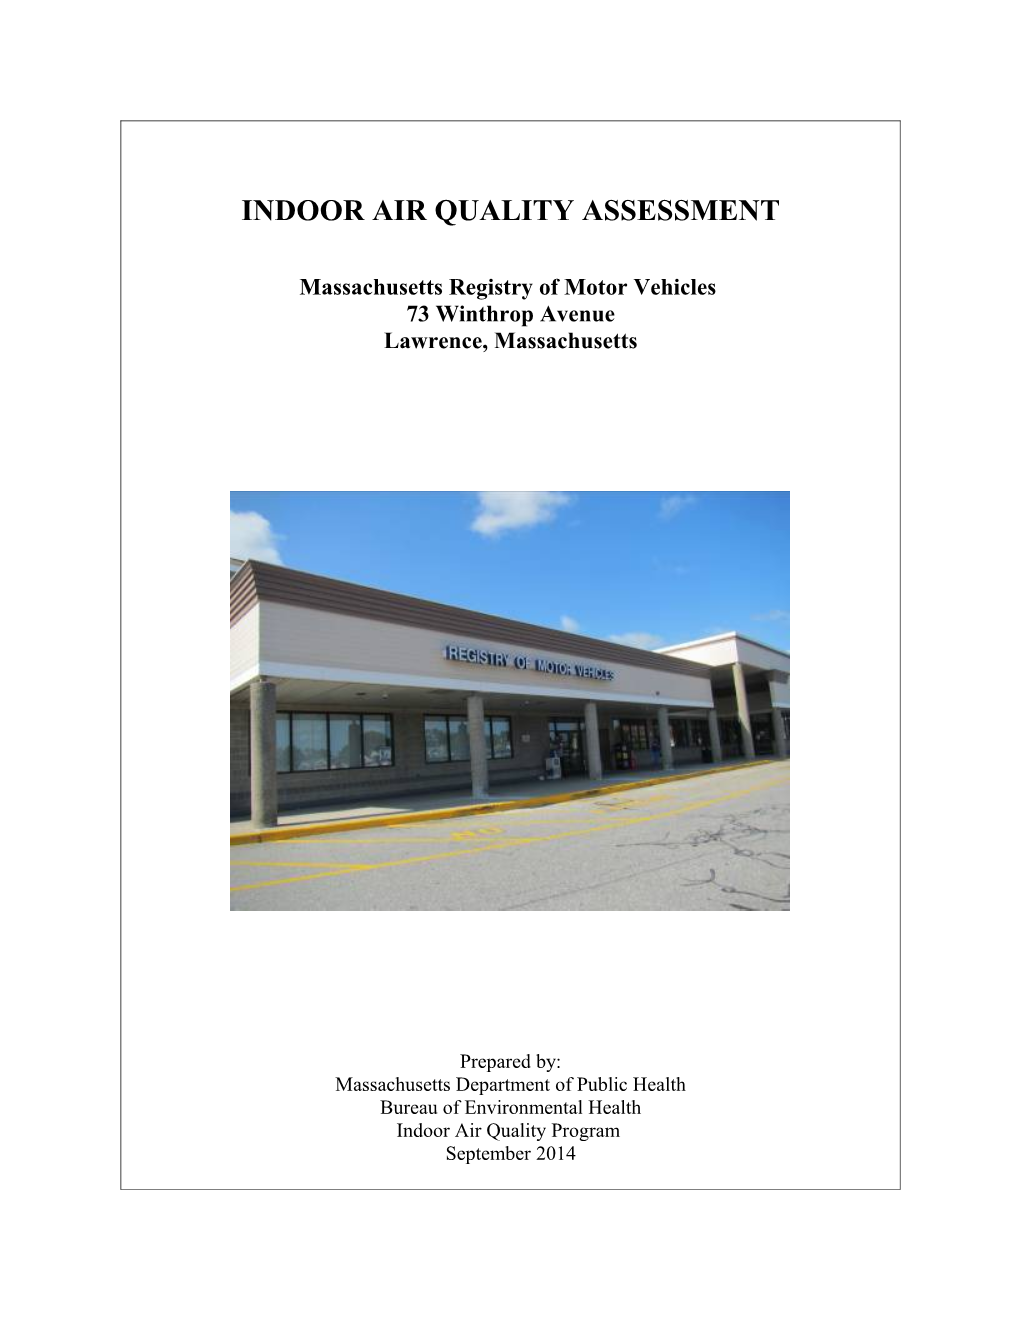 Indoor Air Quality Program - Indoor Air Quality Program, 73 Winthrop Avenue, Lawrence